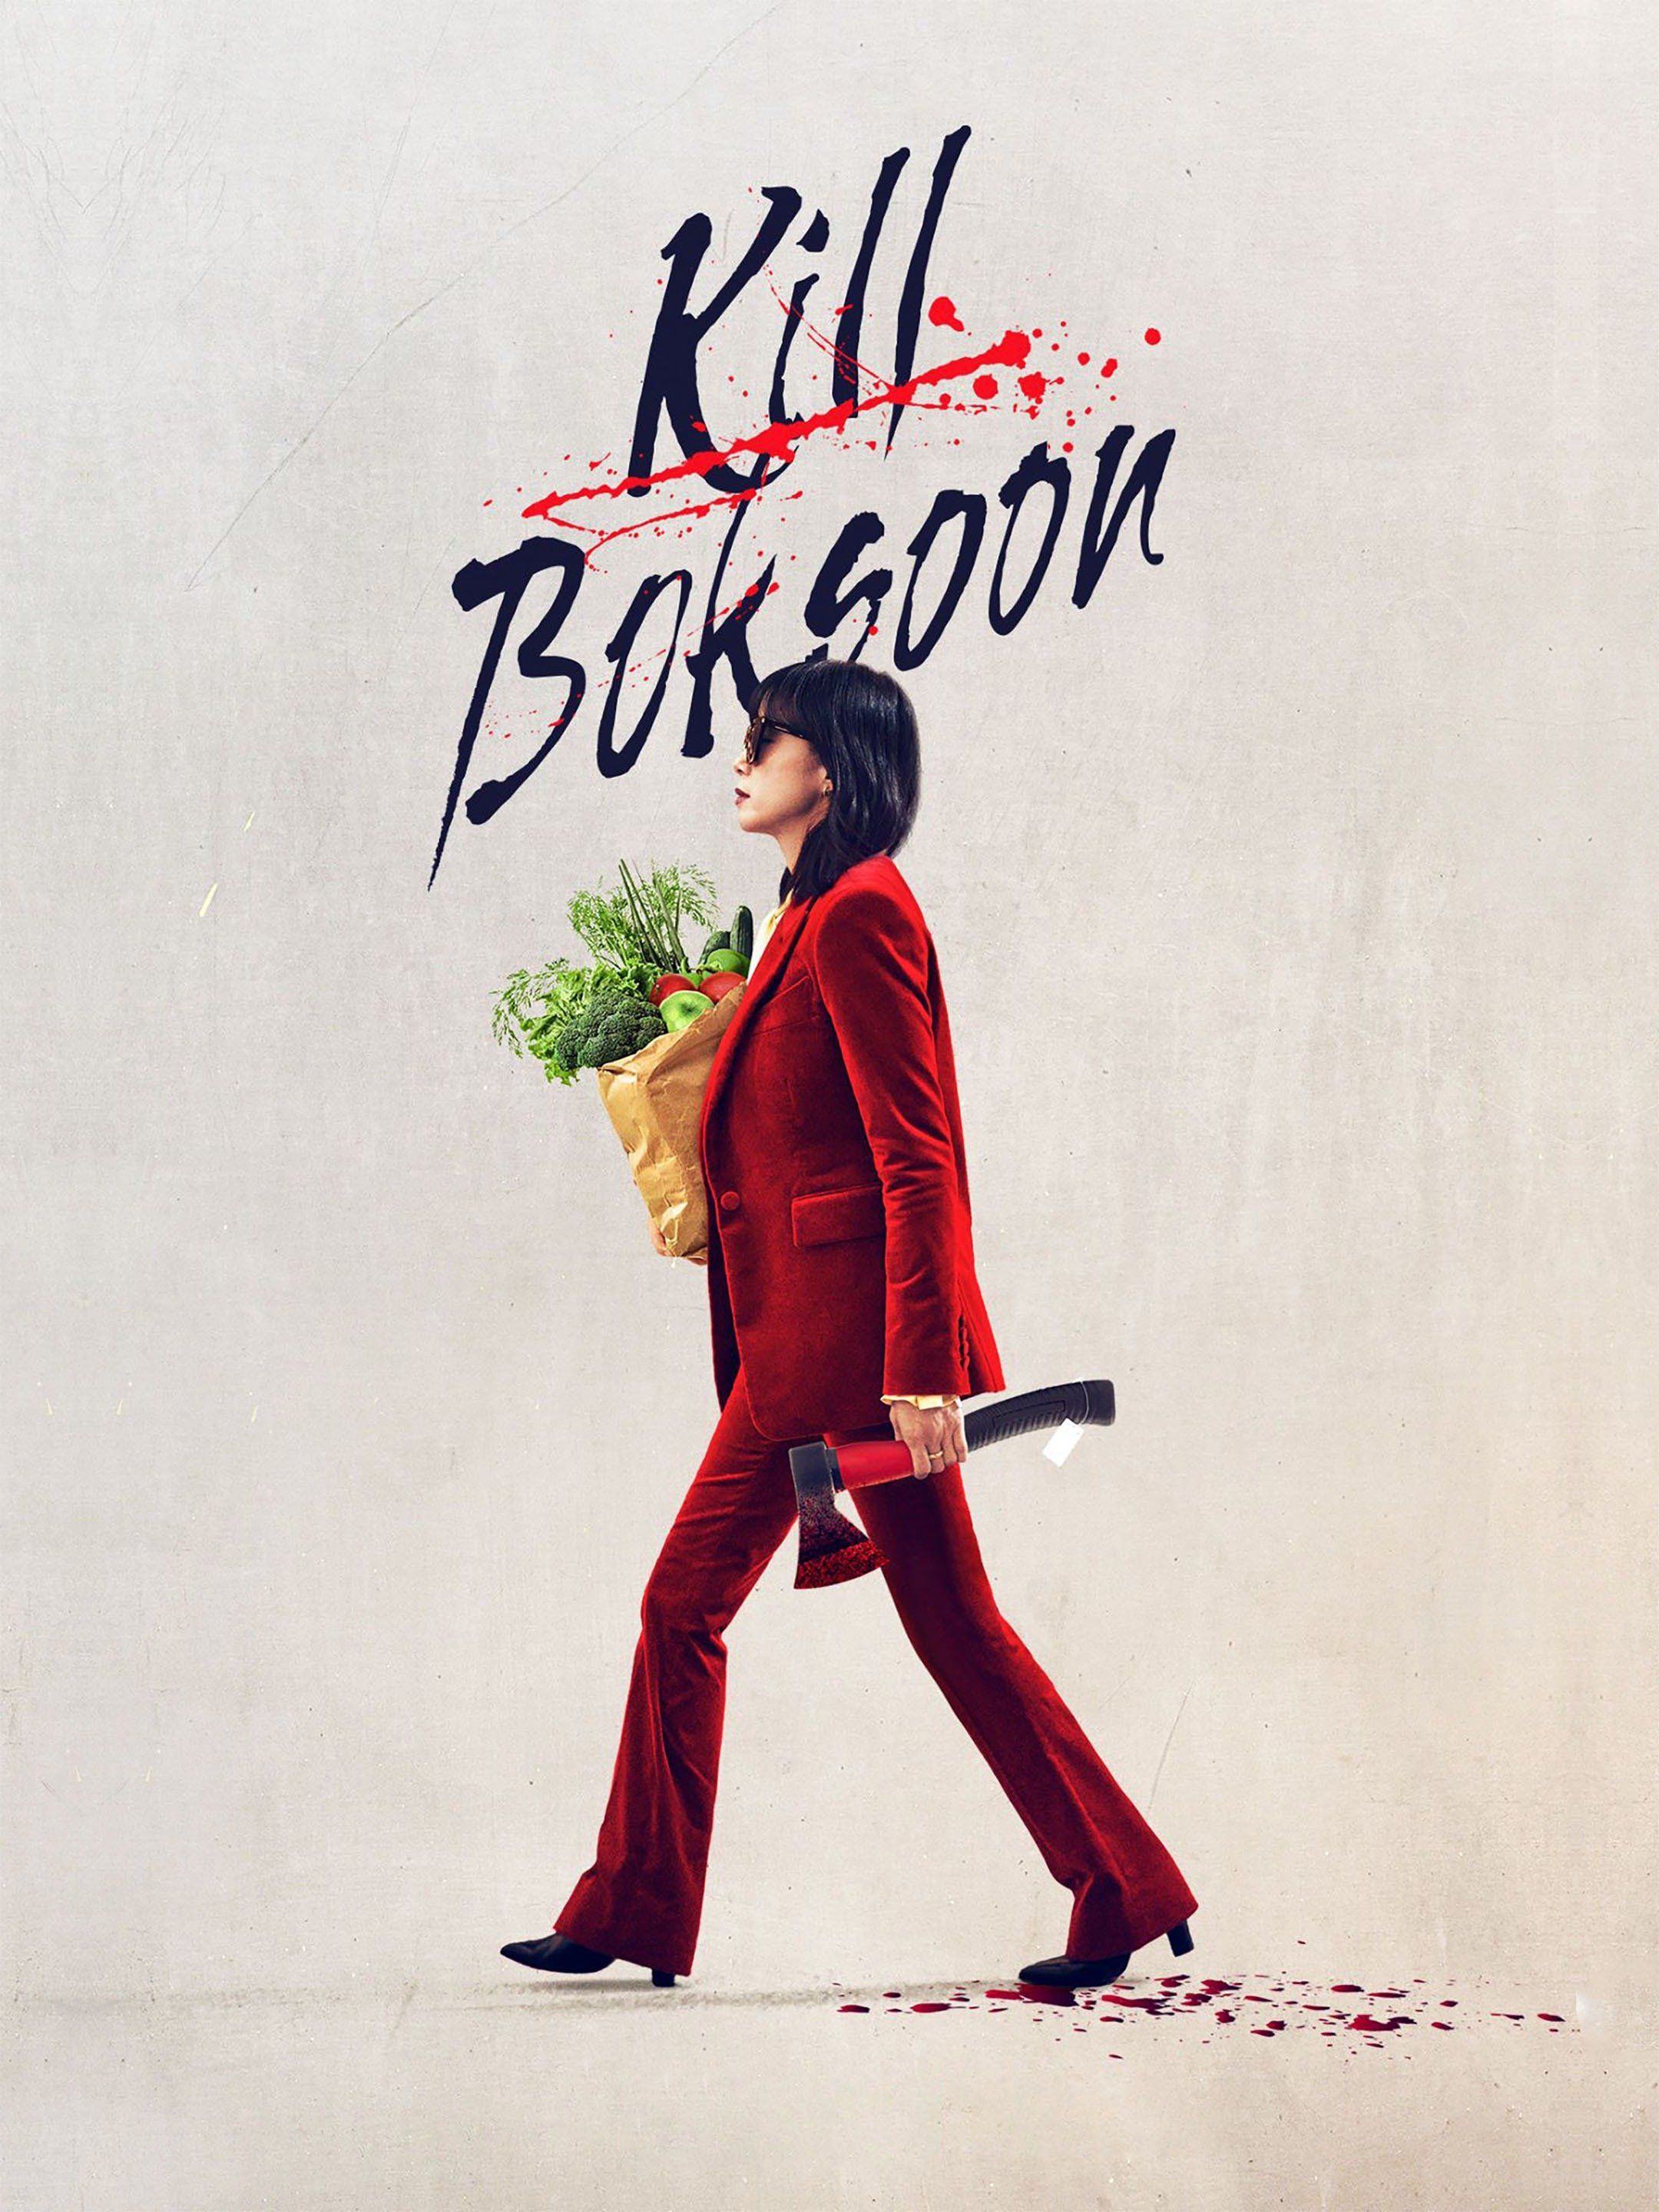 Kill Bok-soon, Byun Sung-hyun